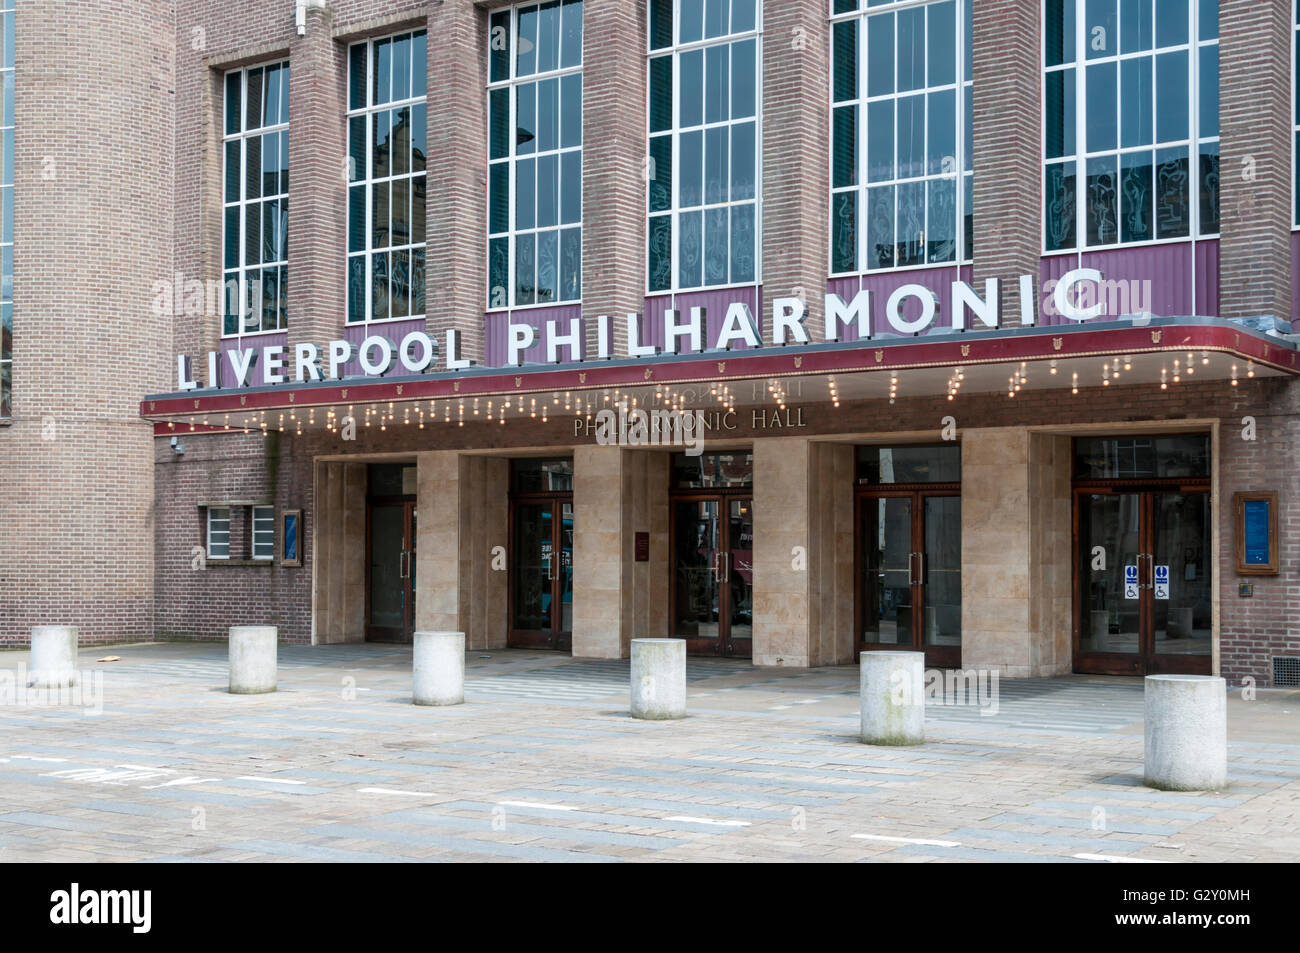 The Philharmonic Hall, home of the Liverpool Philharmonic. Stock Photo